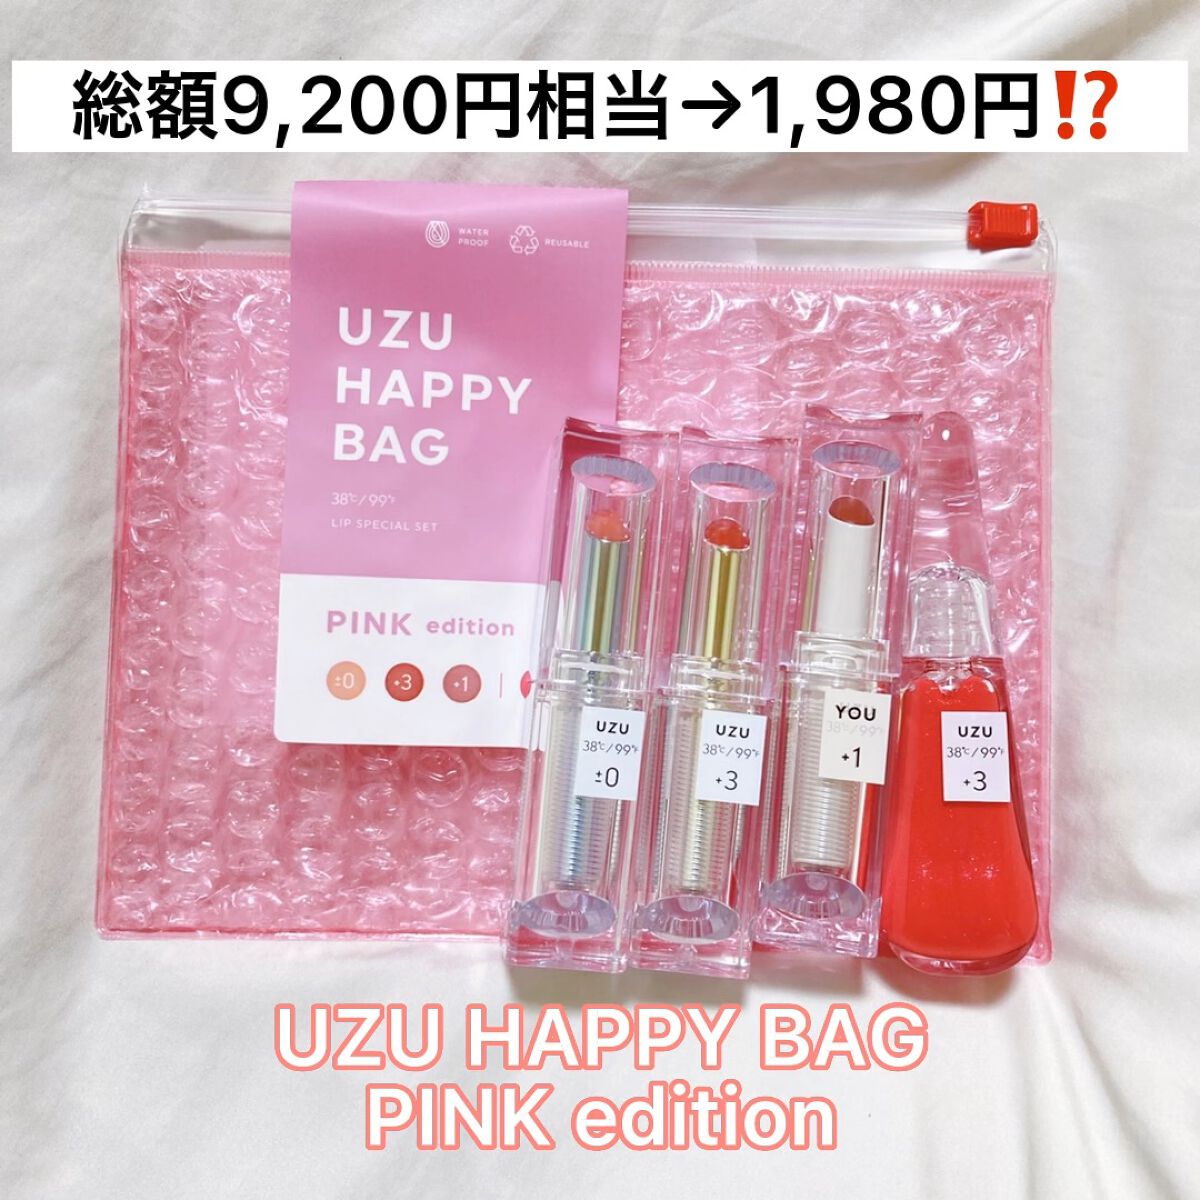 UZU HAPPY BAG/UZU BY FLOWFUSHI/メイクアップキットの動画クチコミ4つ目